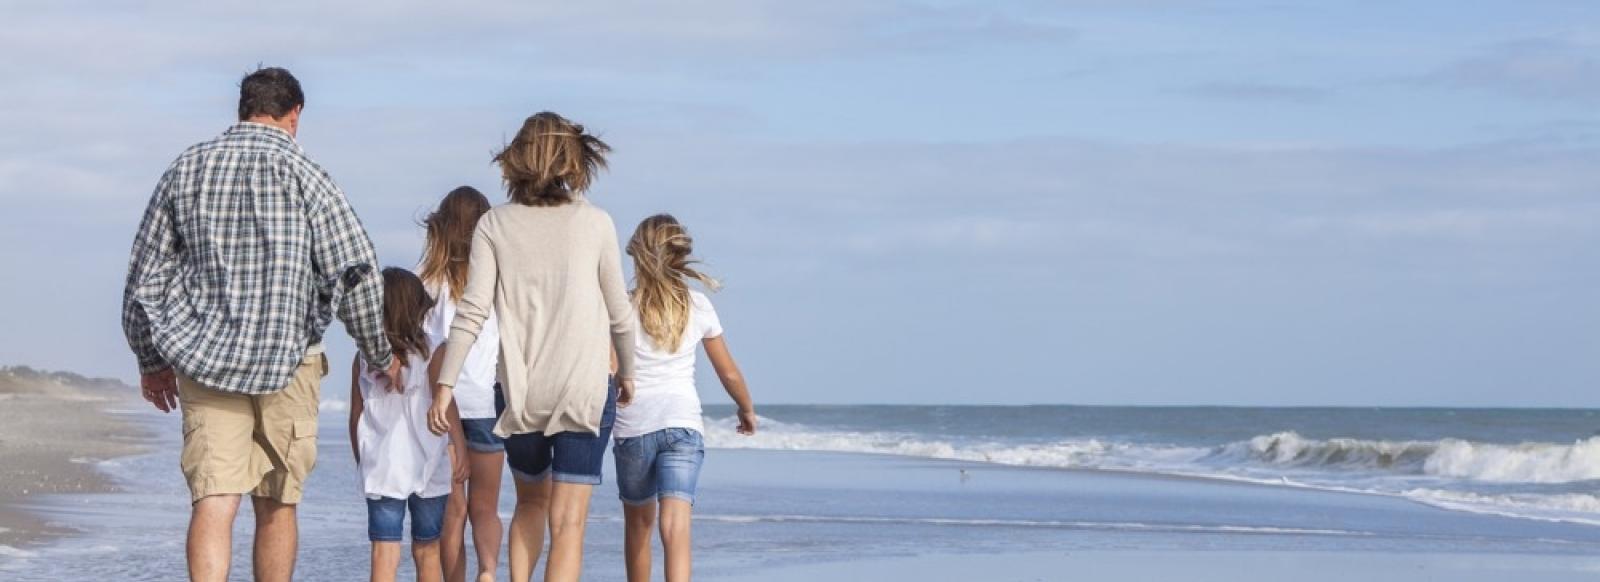 Family on a beach, cheap caravan holidays in wales